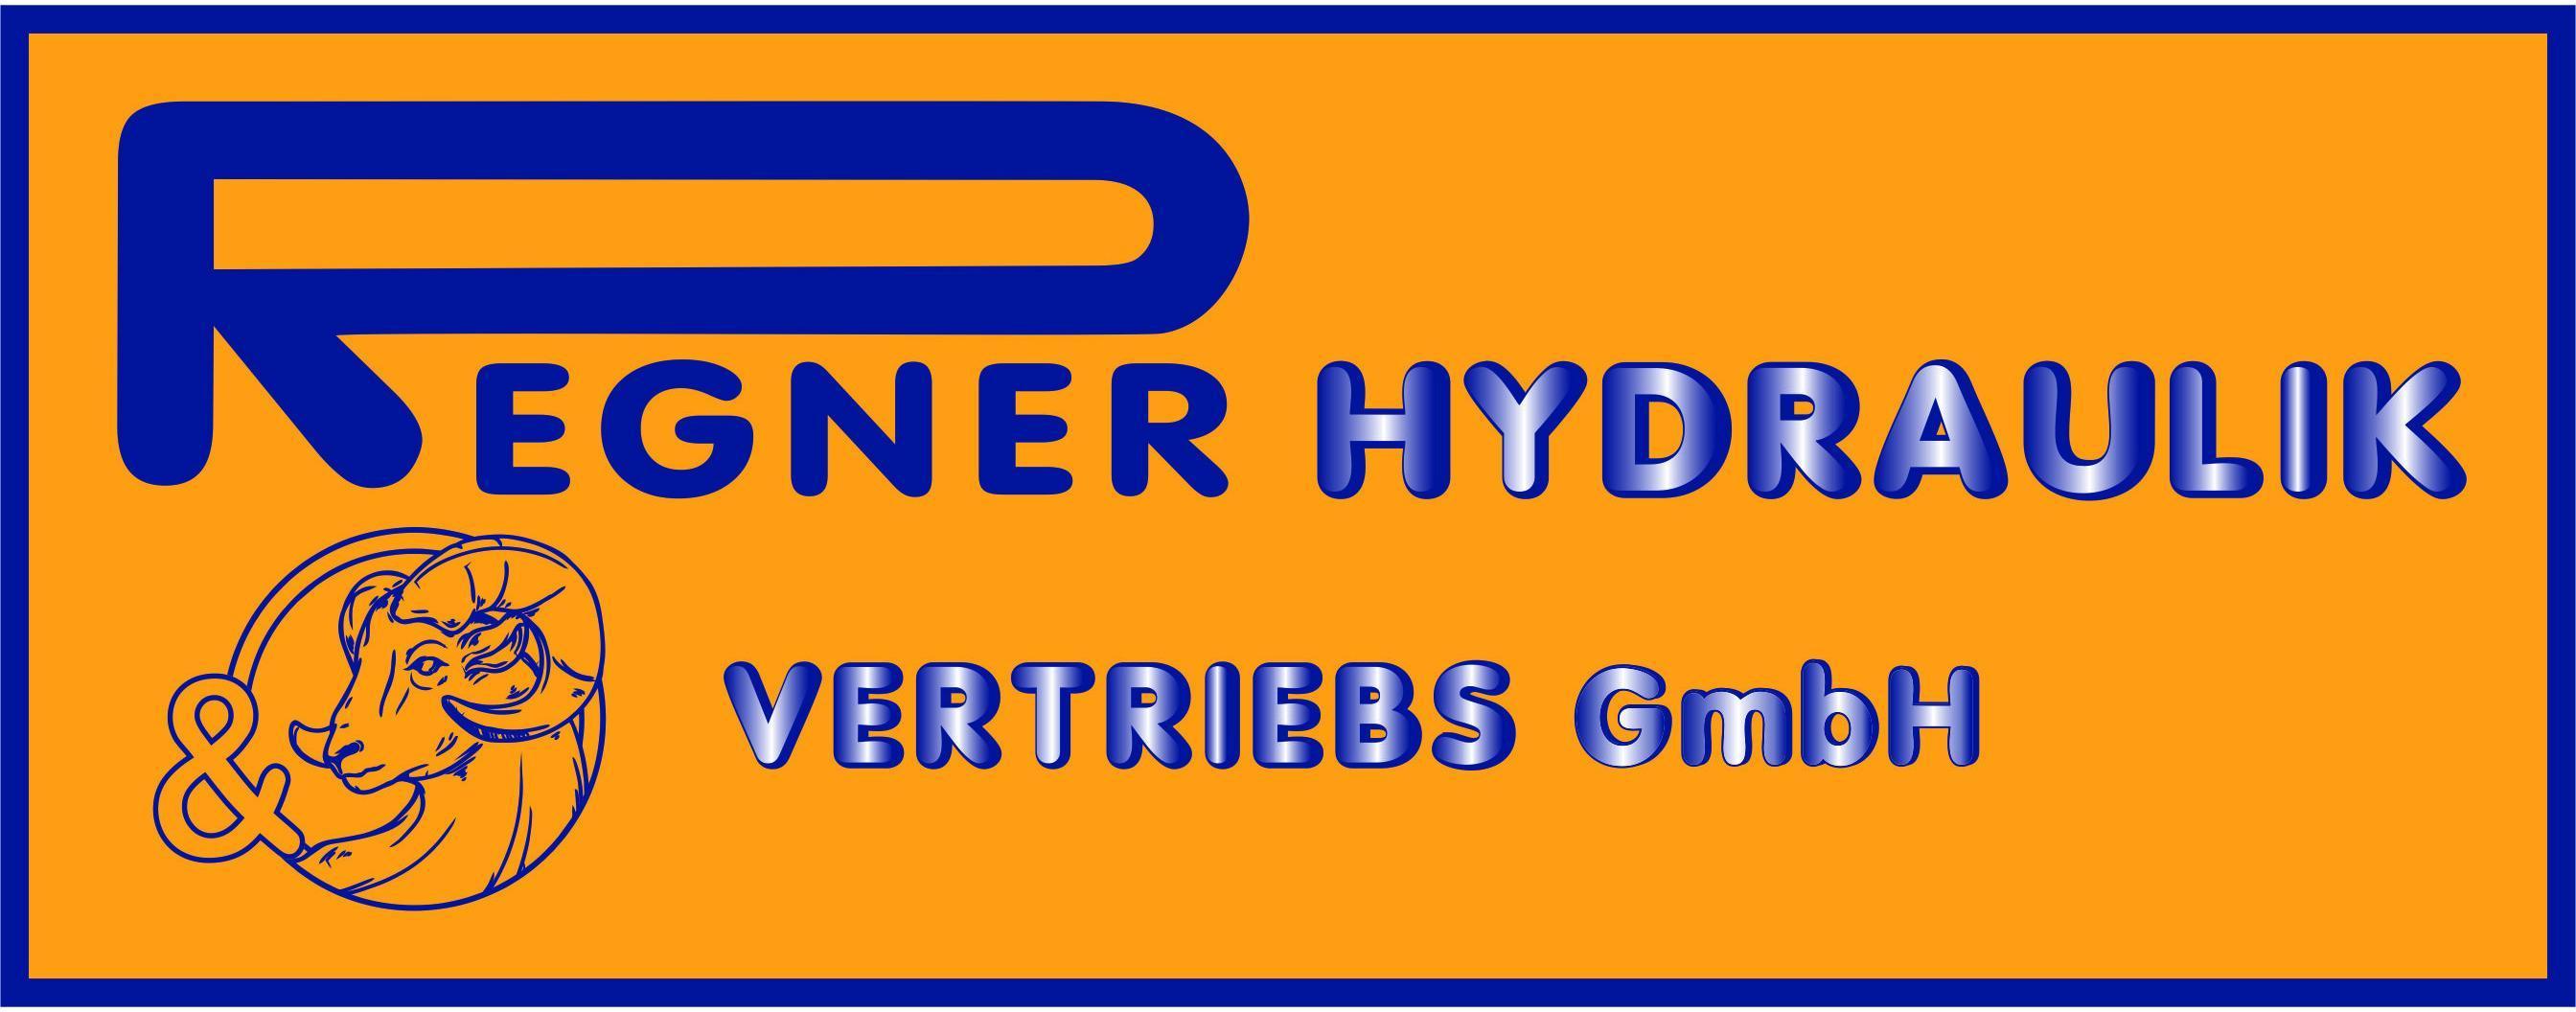 Logo Regner Hydraulik & Vertriebs Gmbh